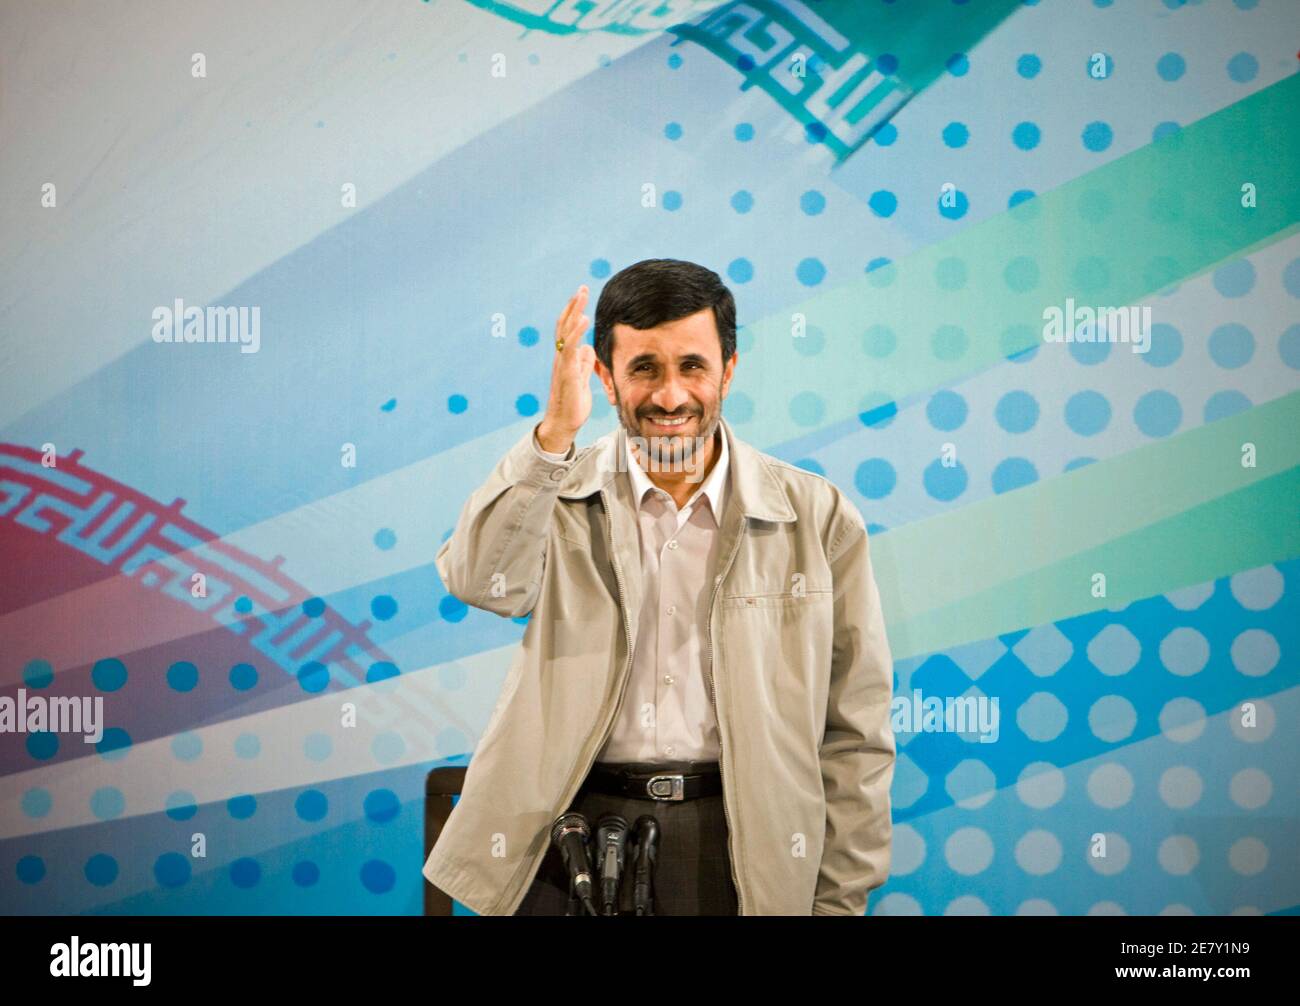 Iran's President Mahmoud Ahmadinejad greets journalists before the start of a news conference in Tehran September 18, 2008. REUTERS/Raheb Homavandi (IRAN) Stock Photo